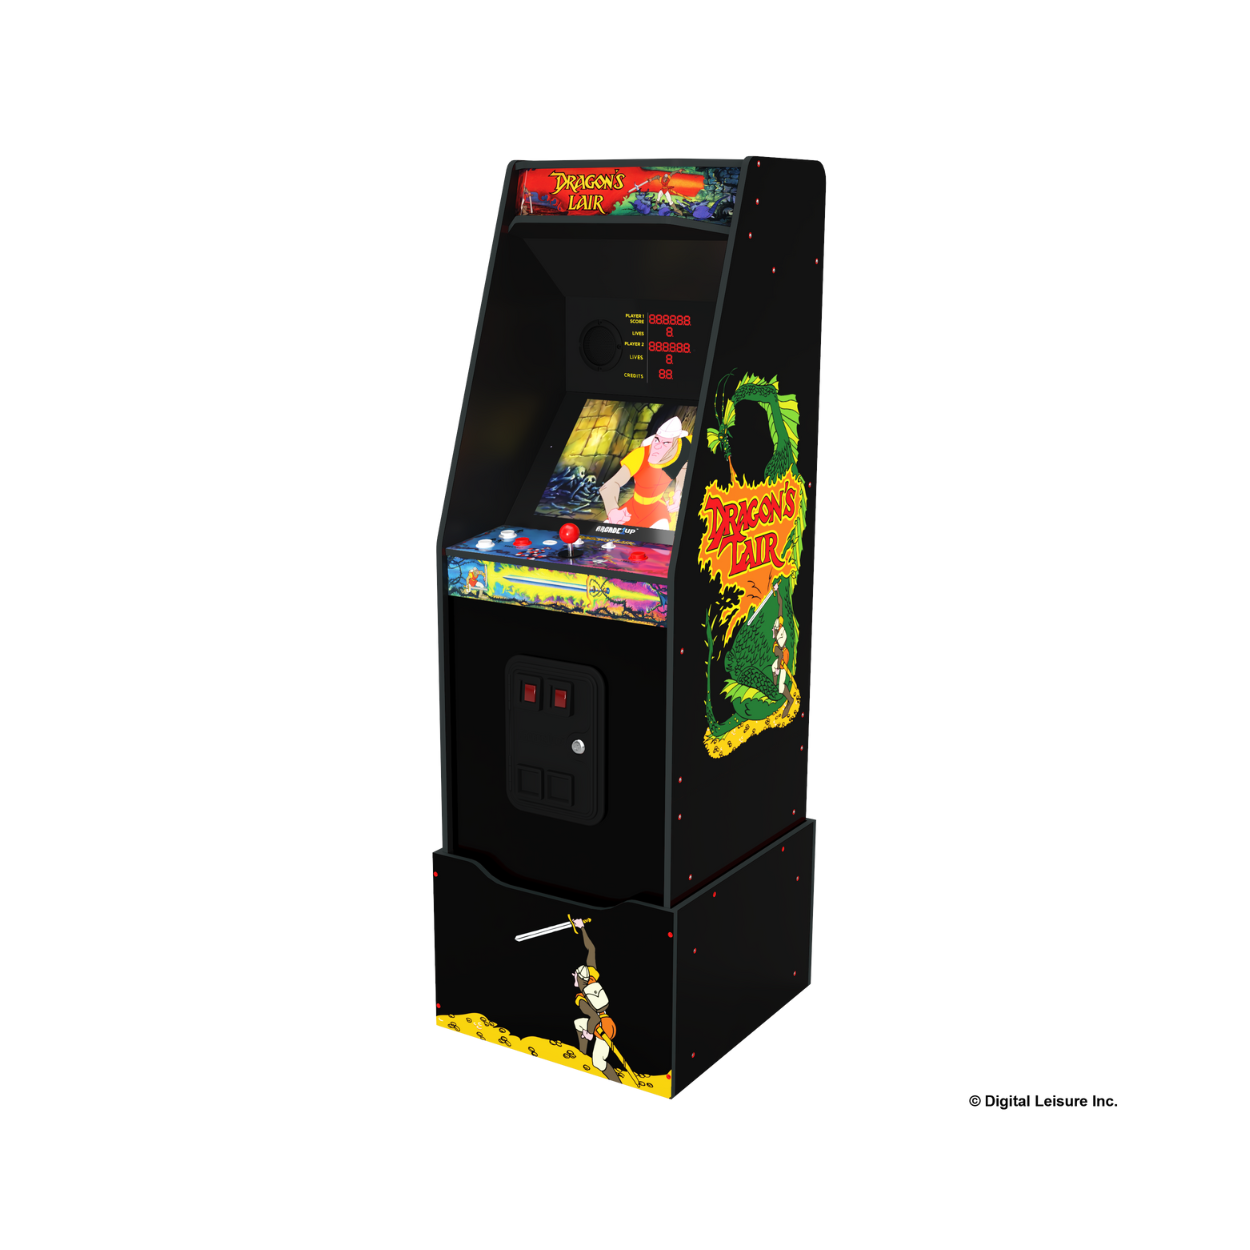 Arcade1UP Dragon’s Lair Arcade Game